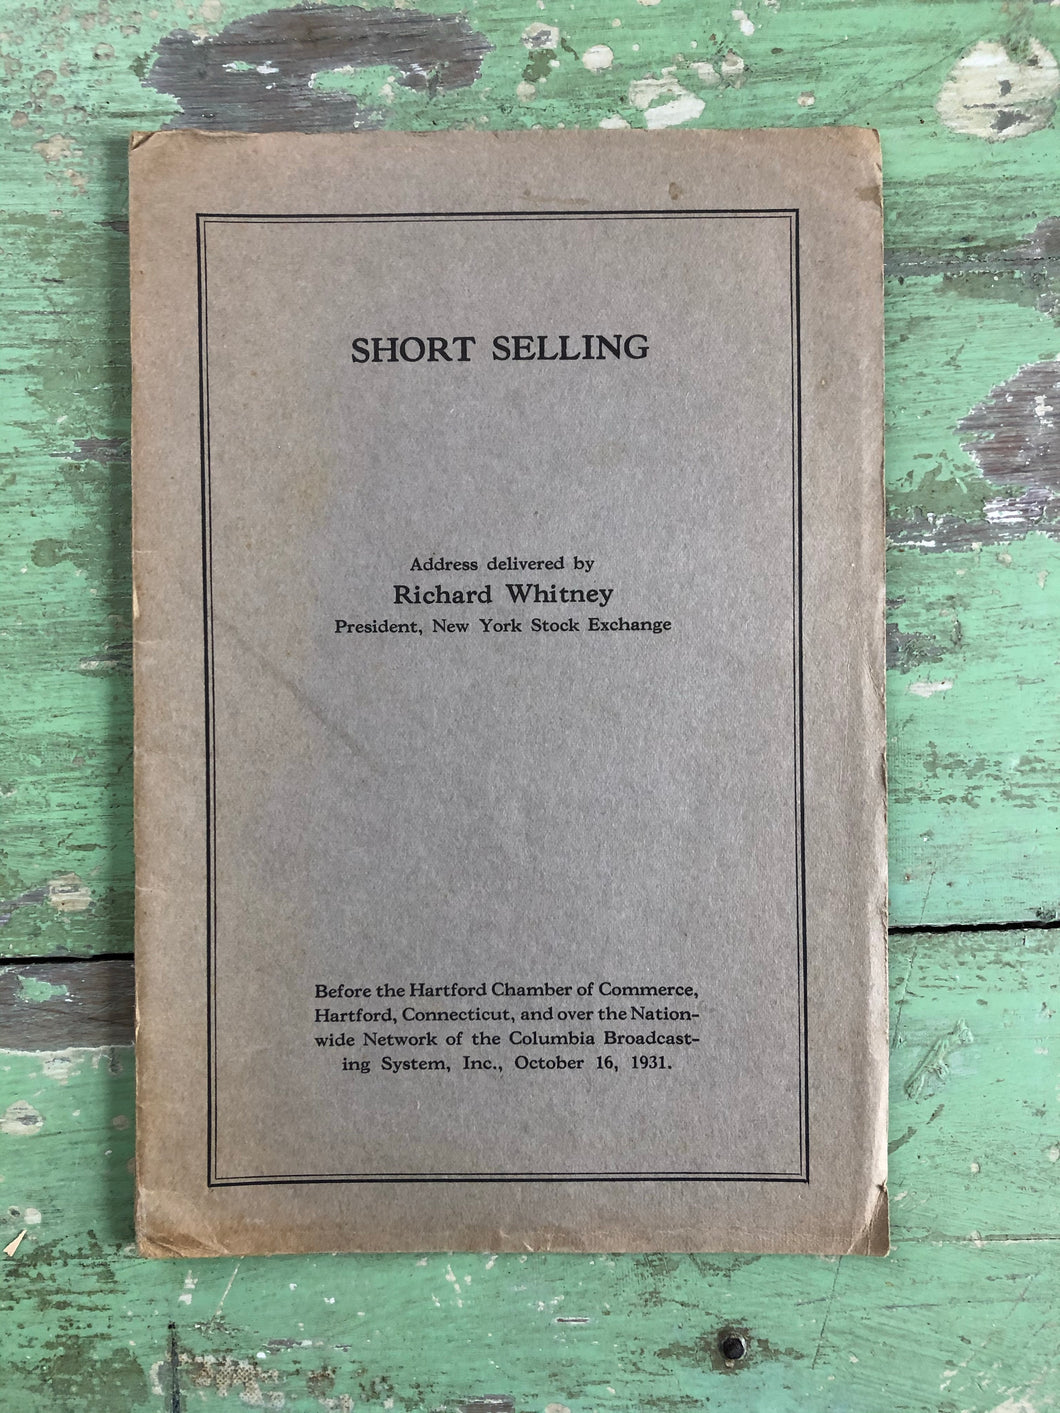 “Short Selling” Address delivered by Richard Whitney, President, New York Stock Exchange